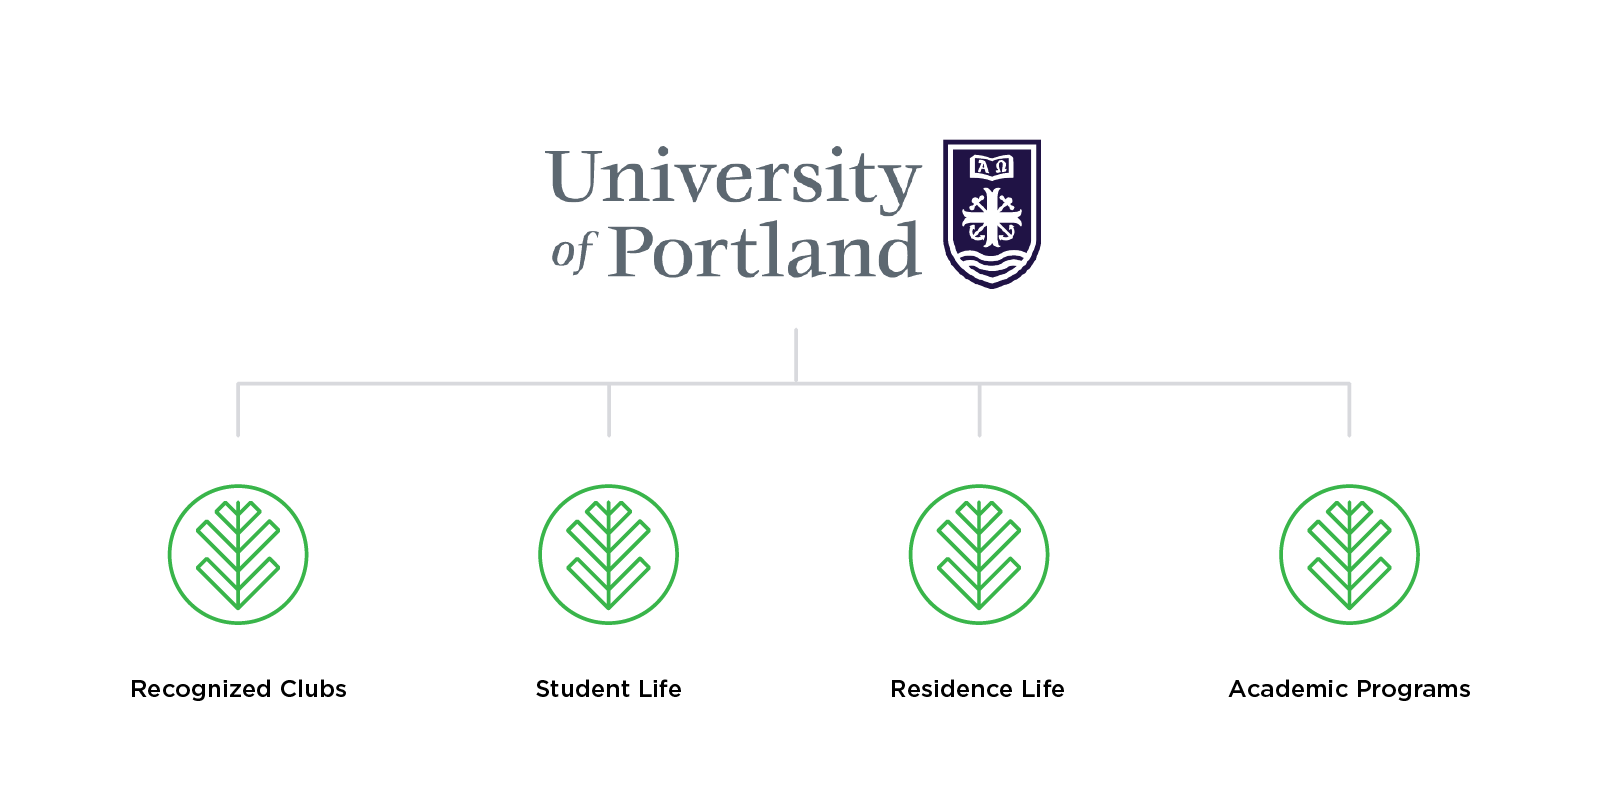 University of Portland’s student engagement platform